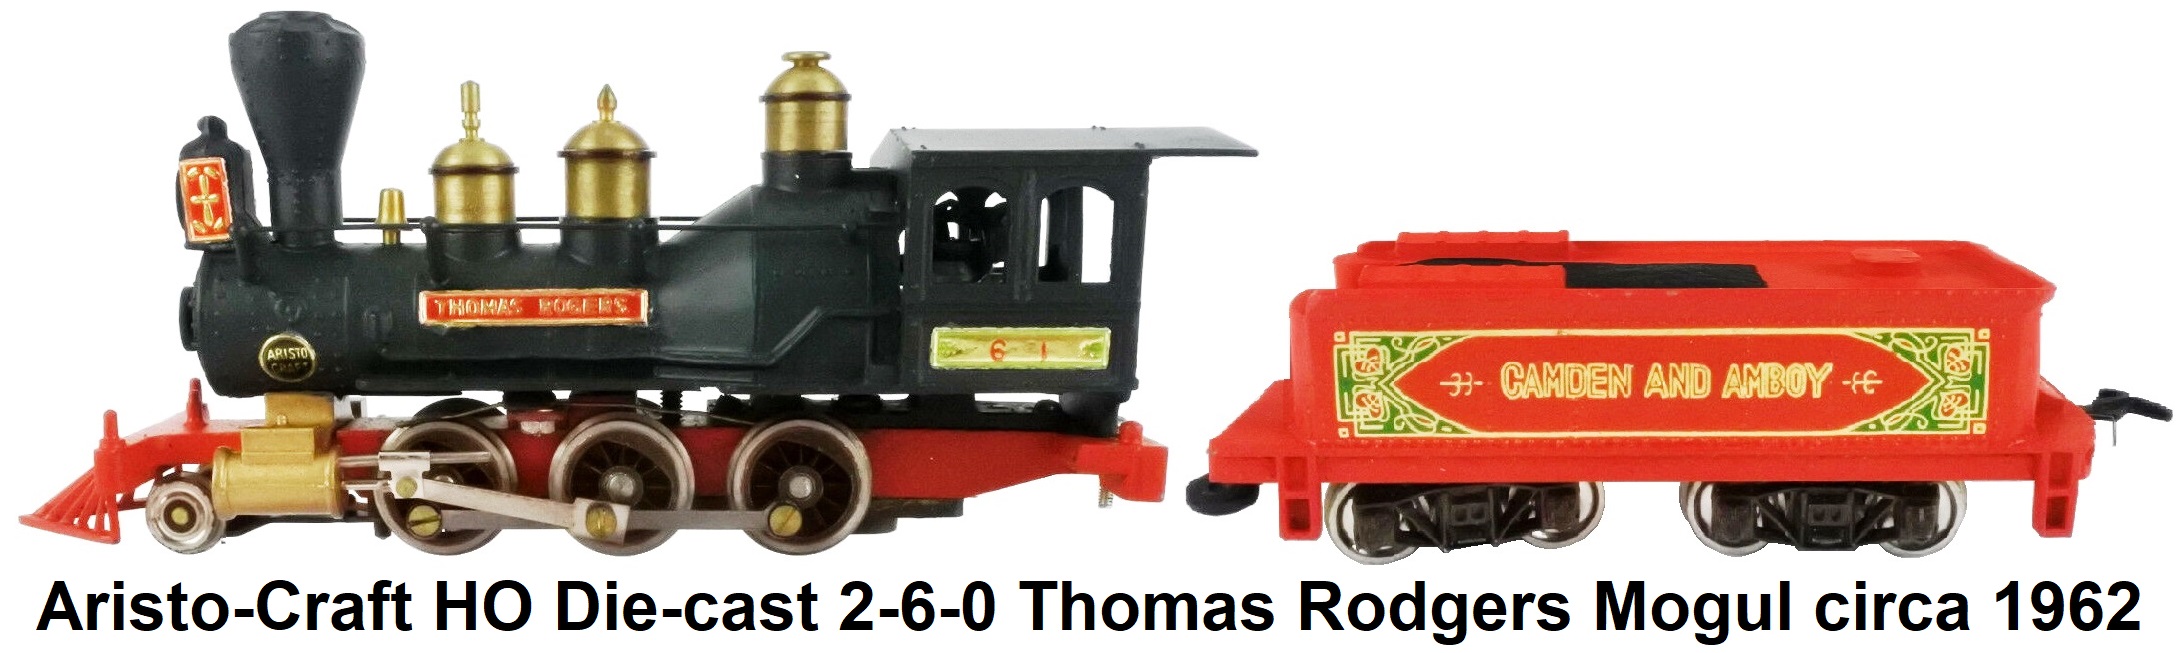 Aristo-Craft HO Die-cast Pioneer Series 2-6-0 Thomas Rodgers Civil War era Mogul Steam Engine & Tender #61 circa 1960's